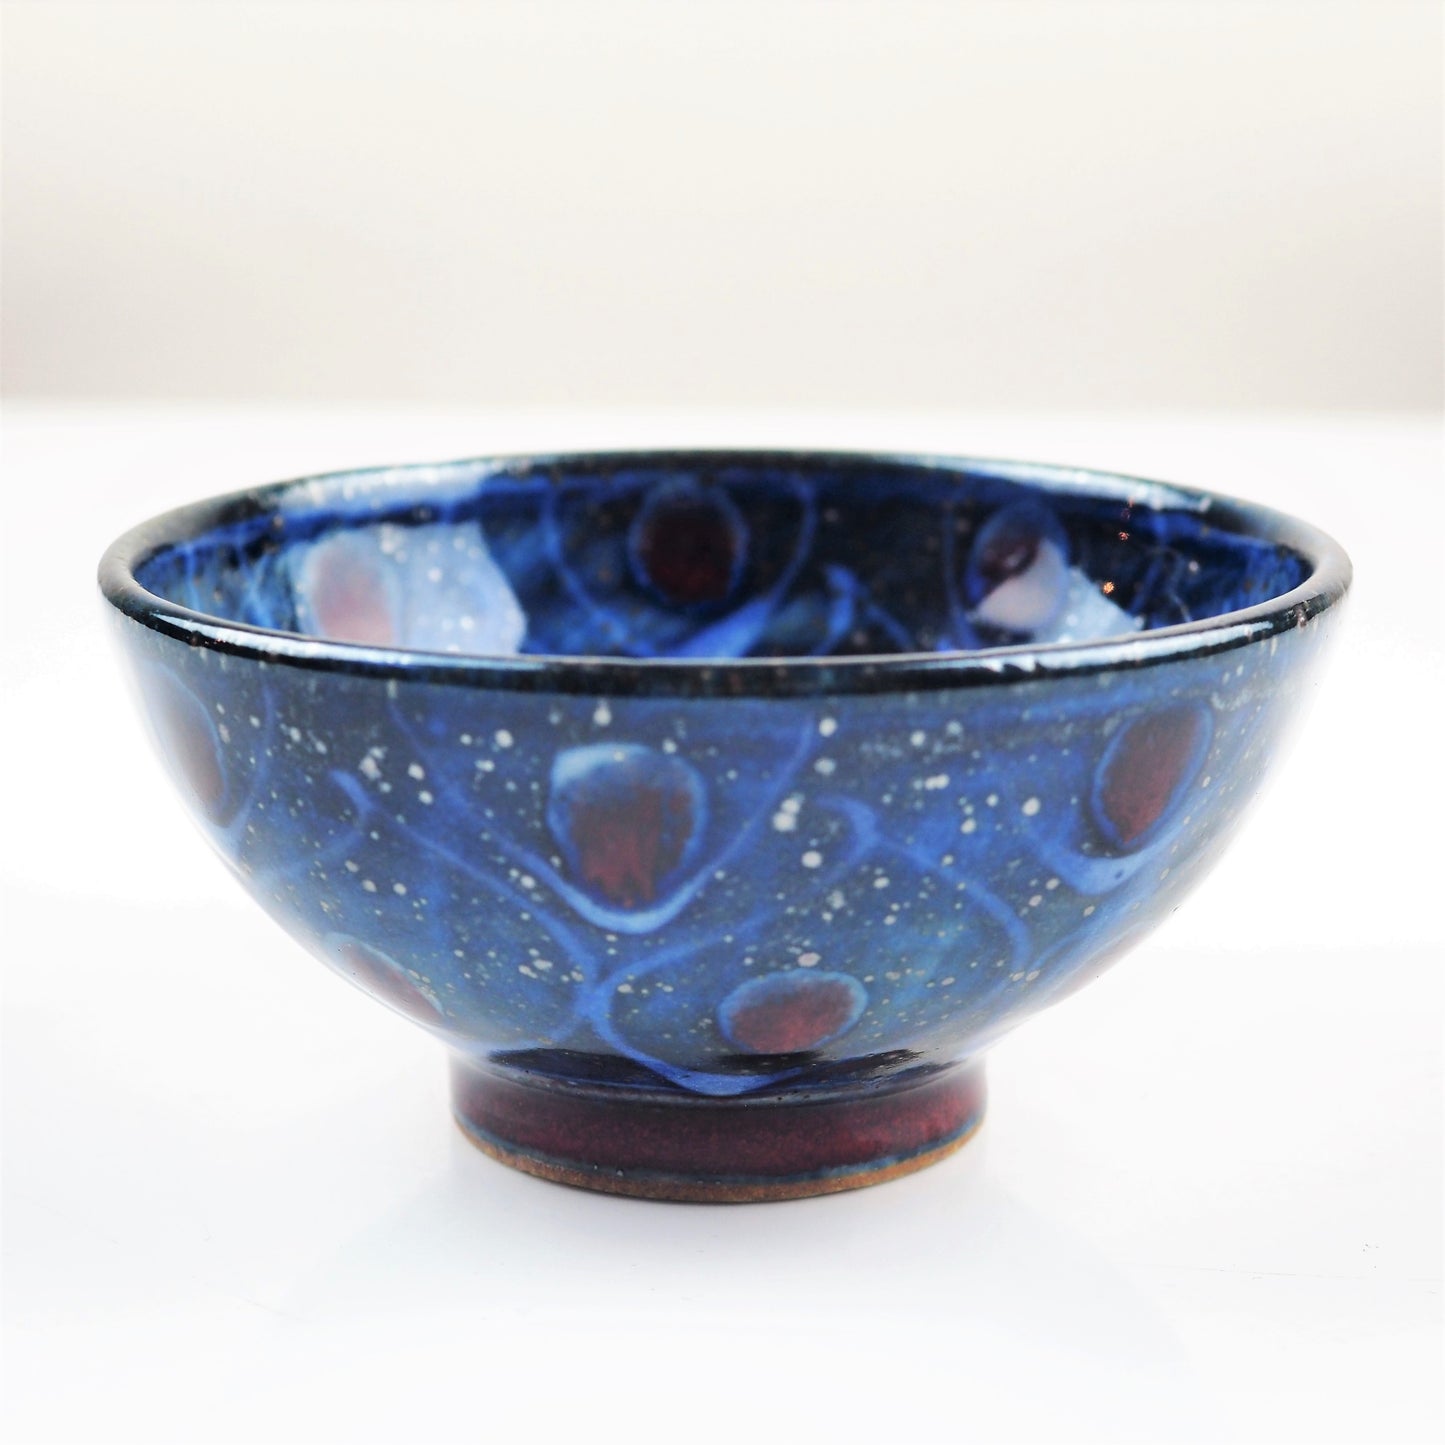 Goldsmith, Robert – Mini Olive Bowl in Peacock Glaze | Robert Goldsmith | Primavera Gallery